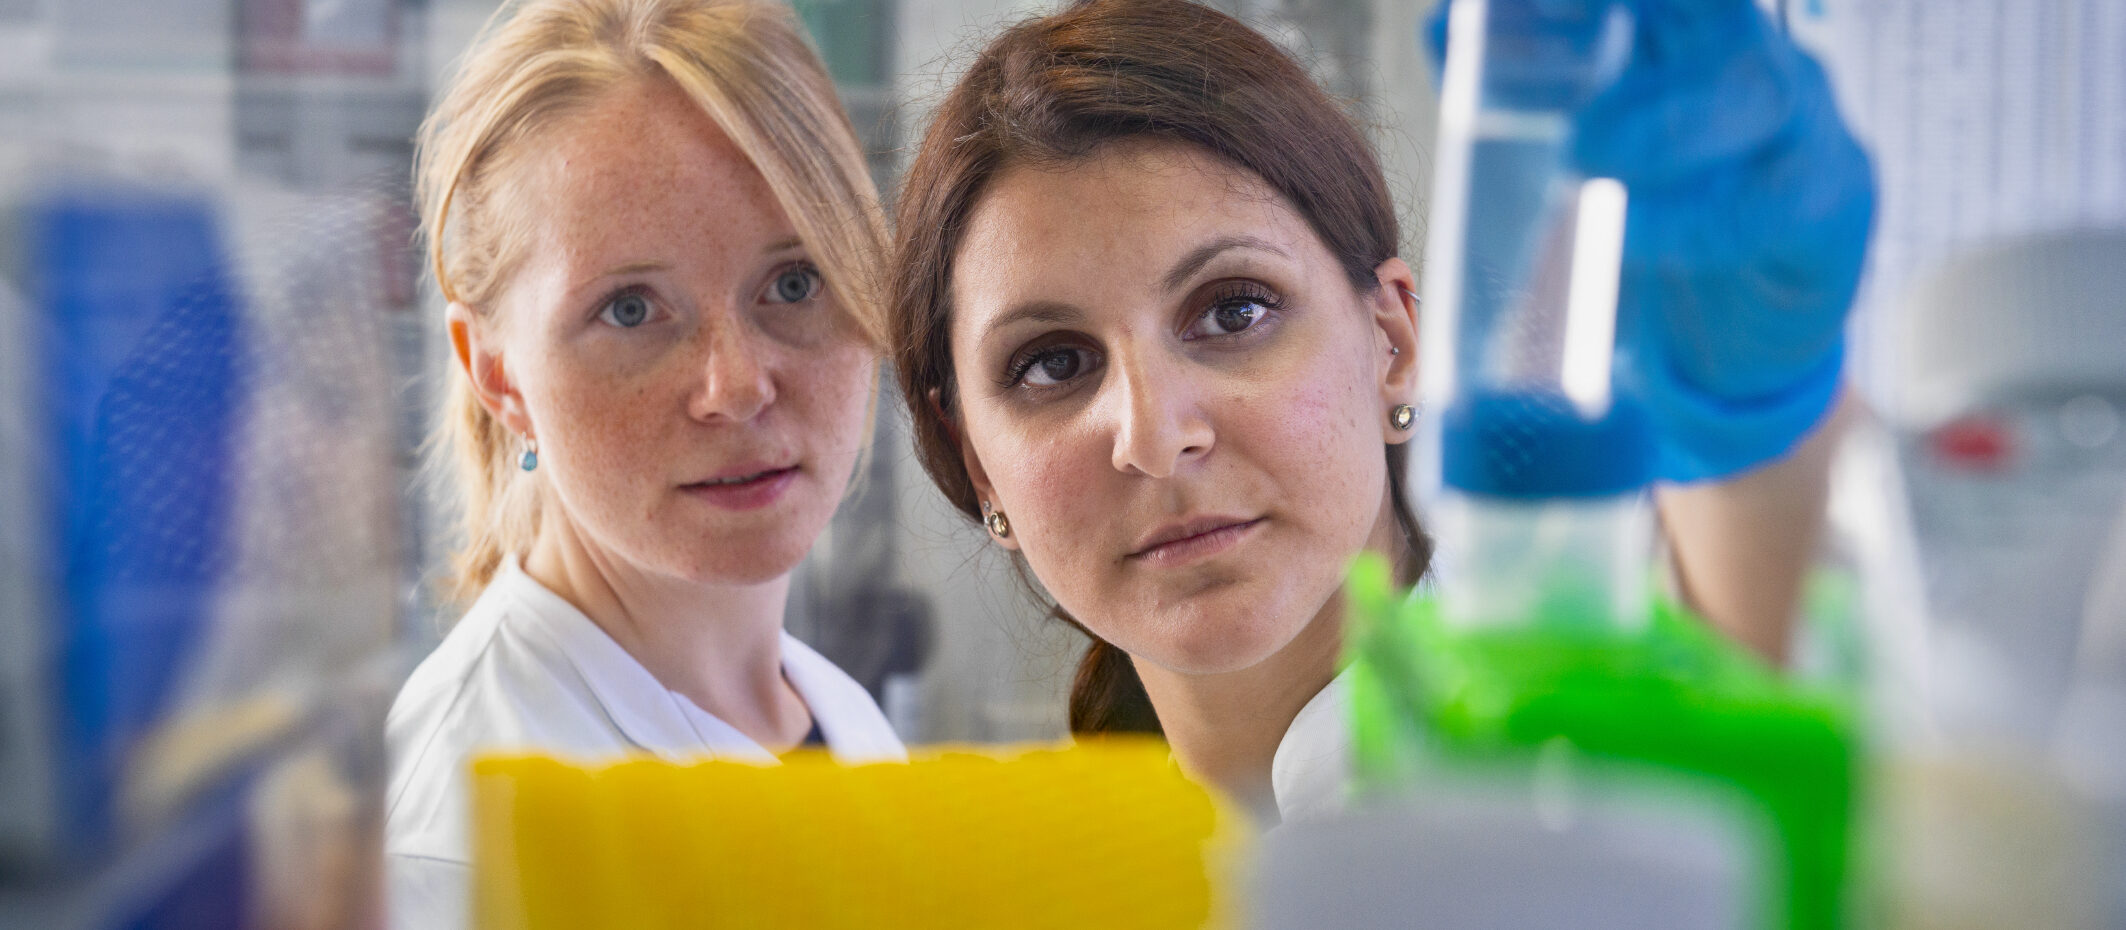 female ImmunoSensation2 scientists in the lab